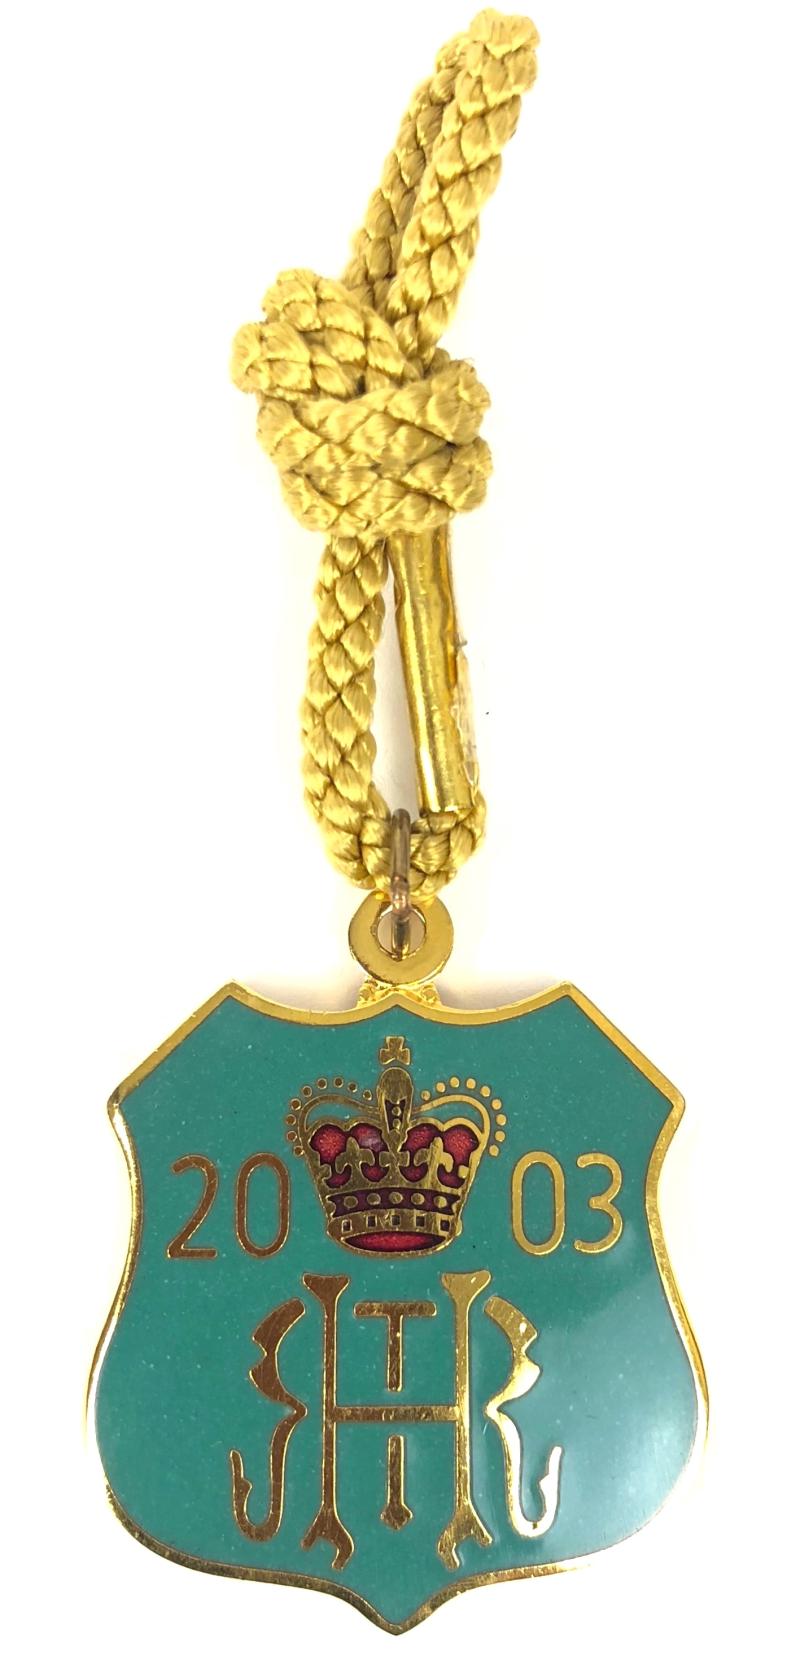 2003 Henley Royal Regatta stewards enclosure badge